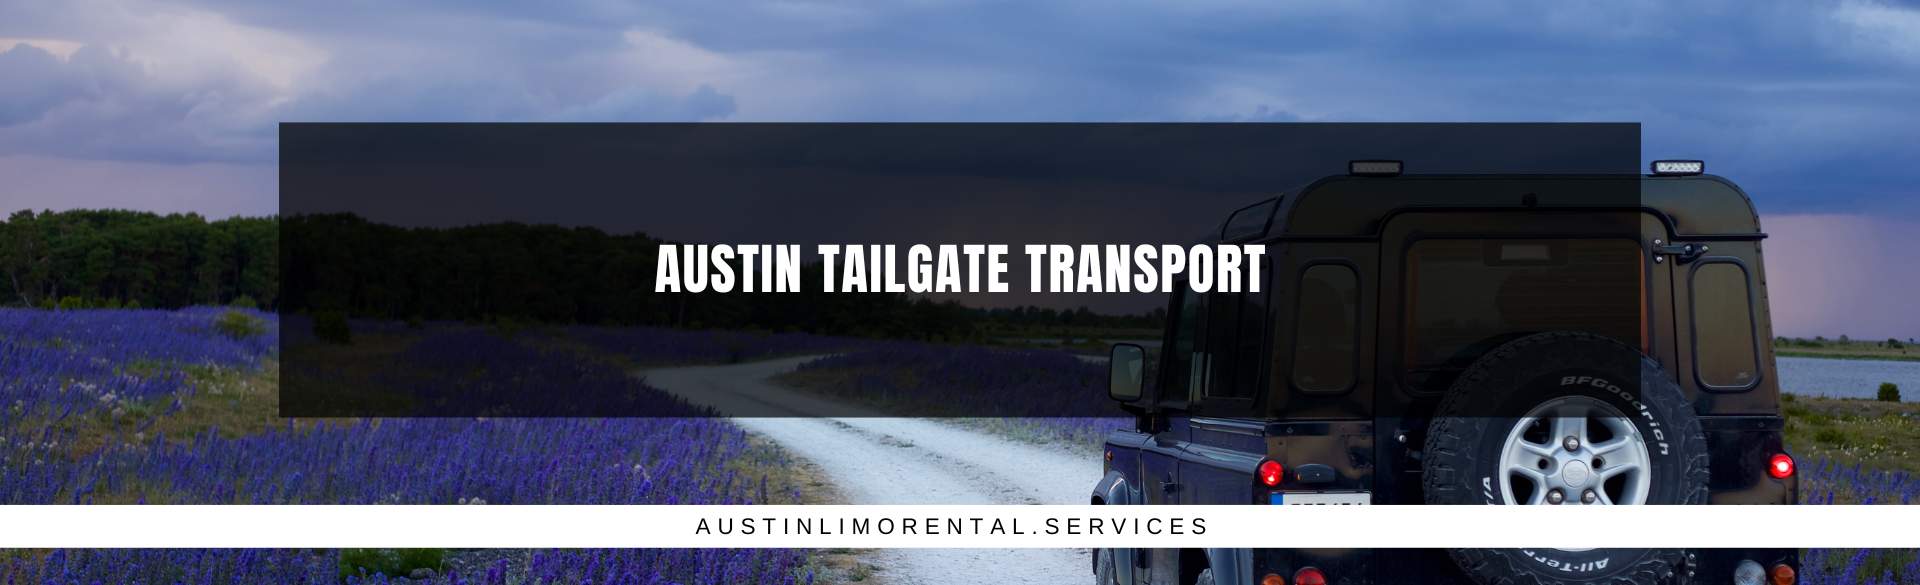 Austin Tailgate Transport